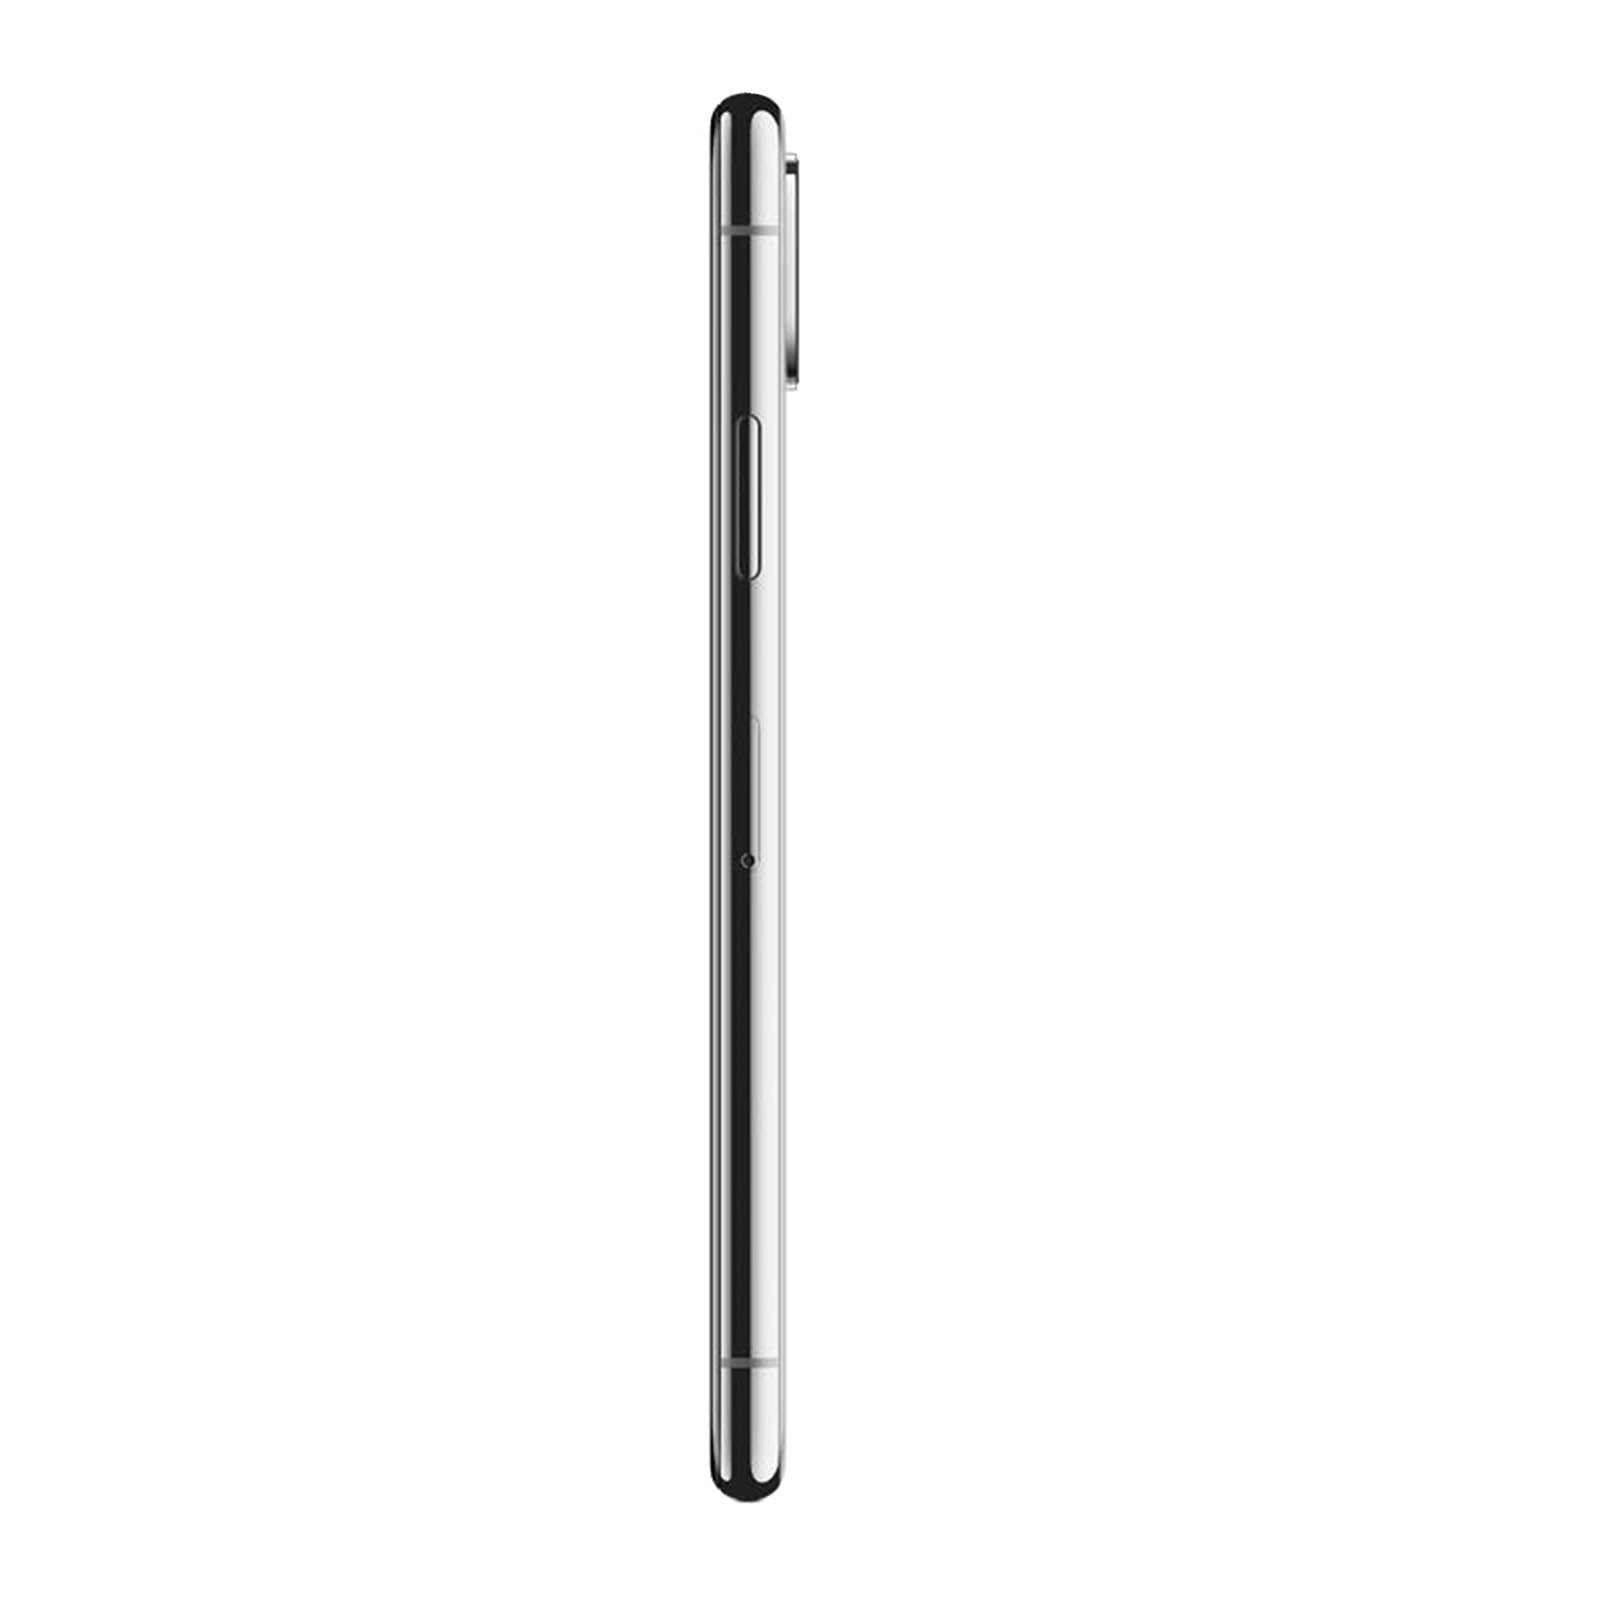 Apple iPhone XS Max 256GB Silver Very Good - Verizon